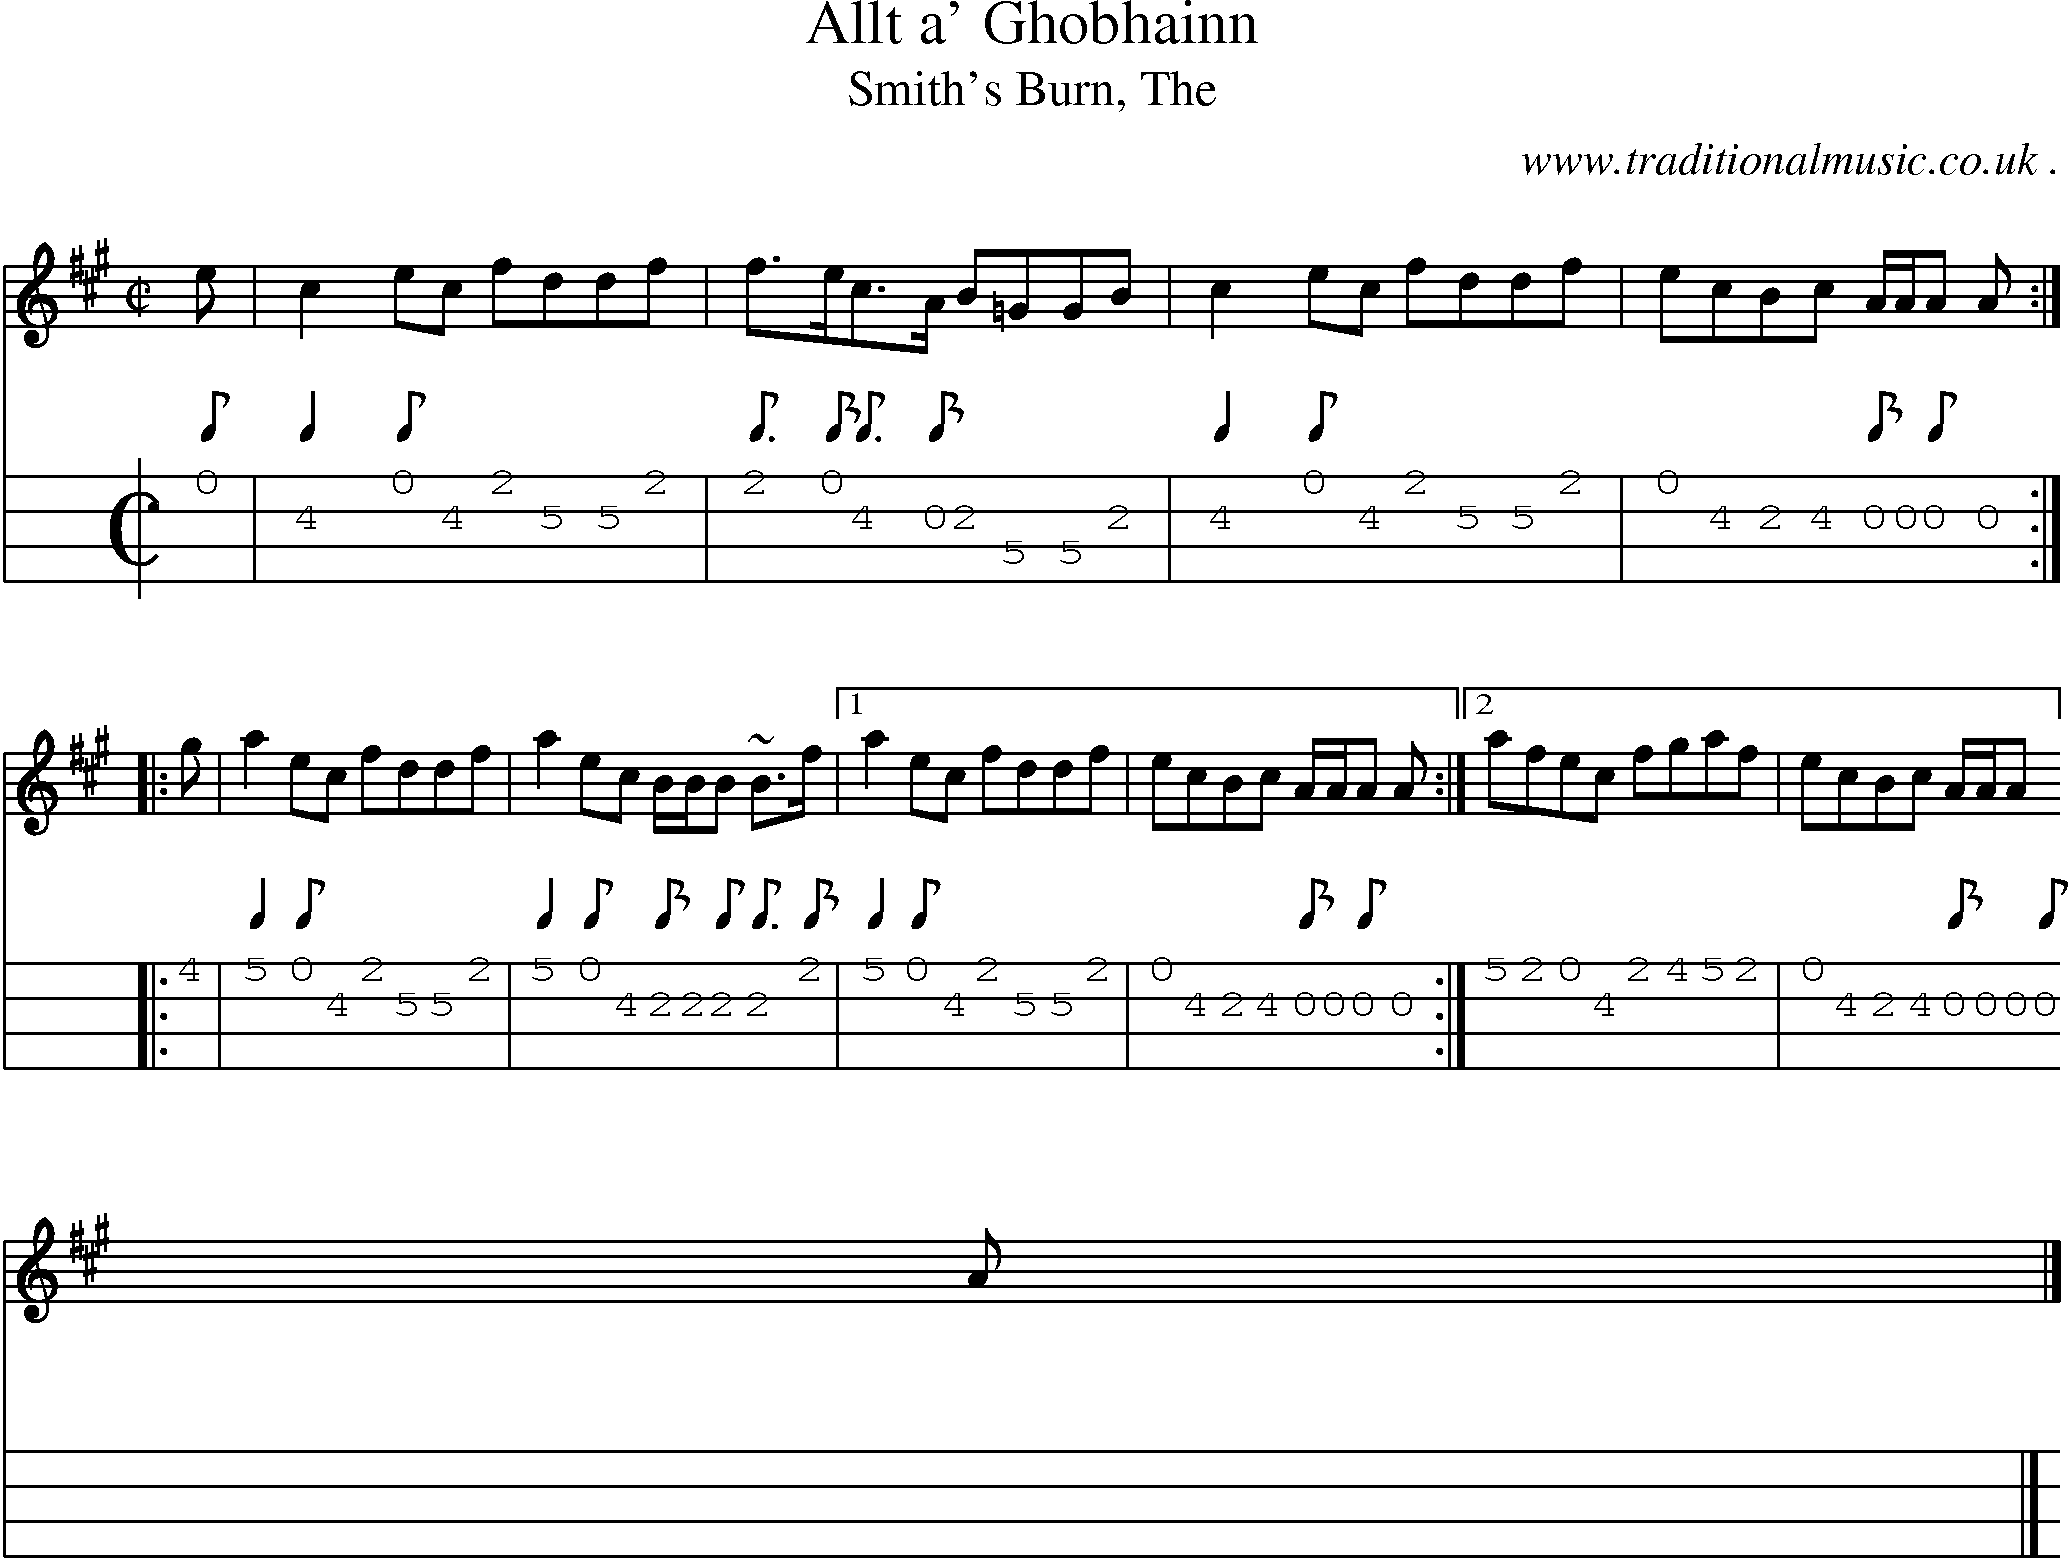 Sheet-music  score, Chords and Mandolin Tabs for Allt A Ghobhainn